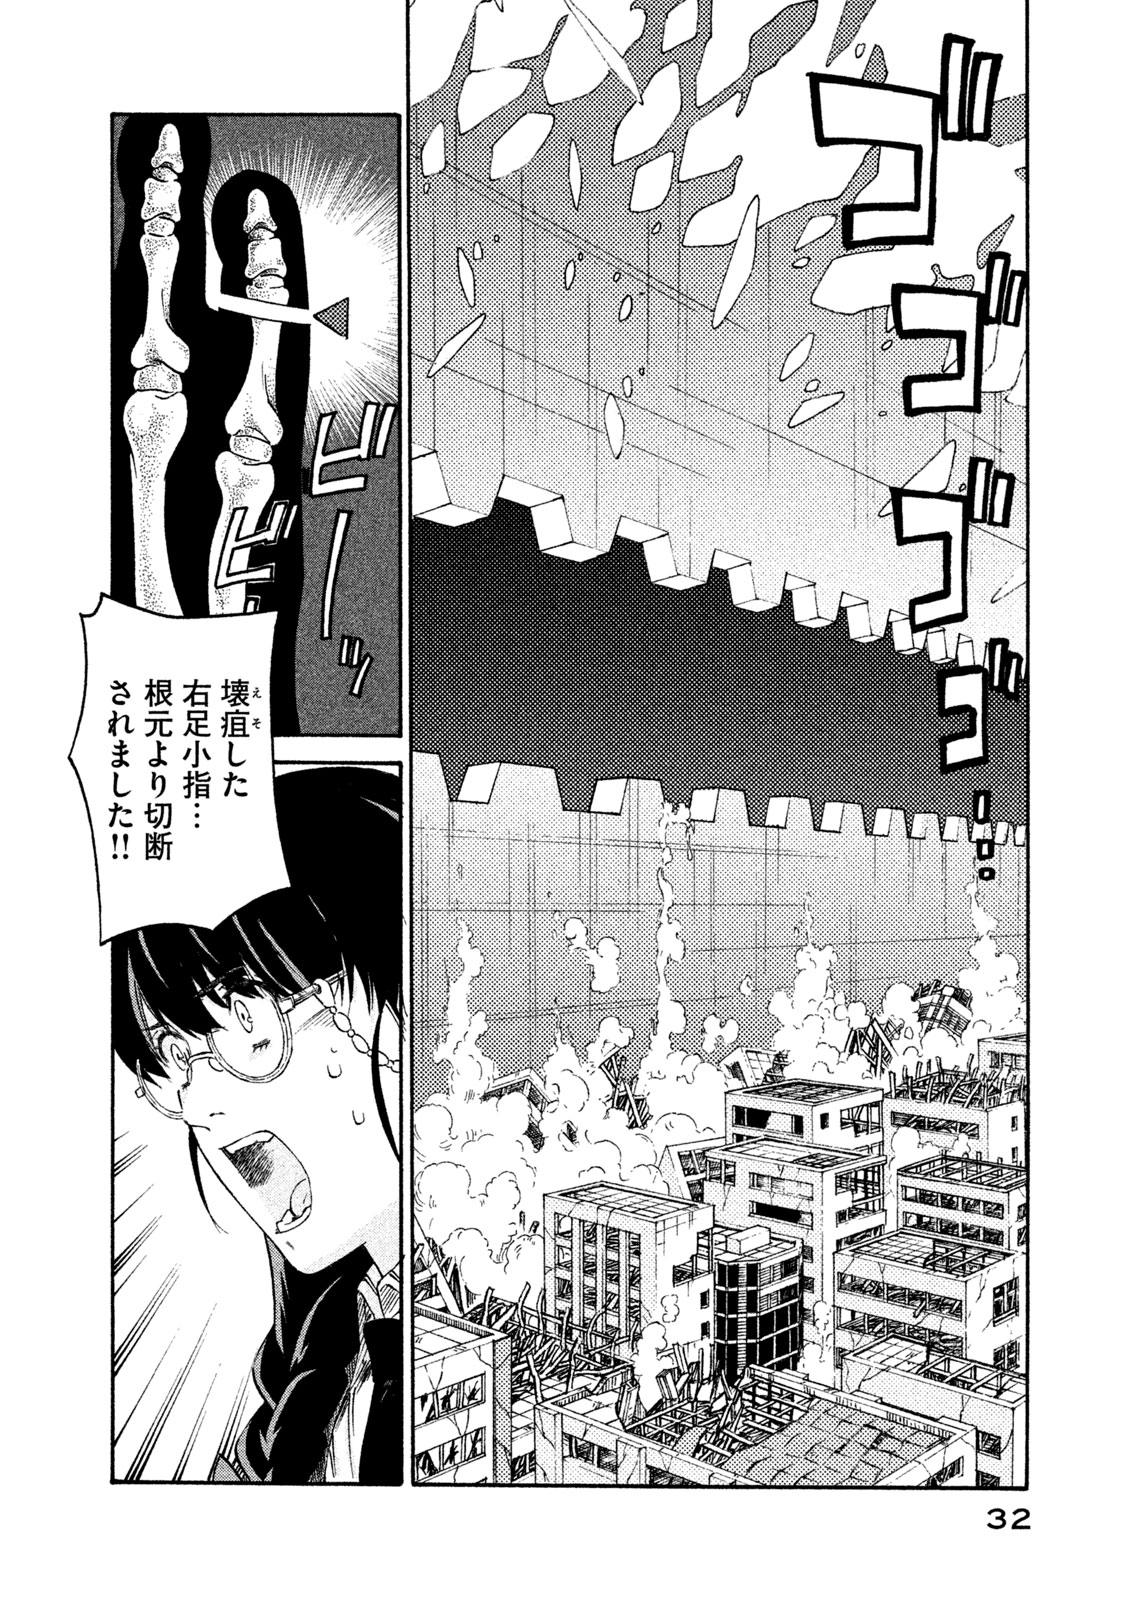 Hataraku Saibou BLACK - Chapter 26 - Page 10